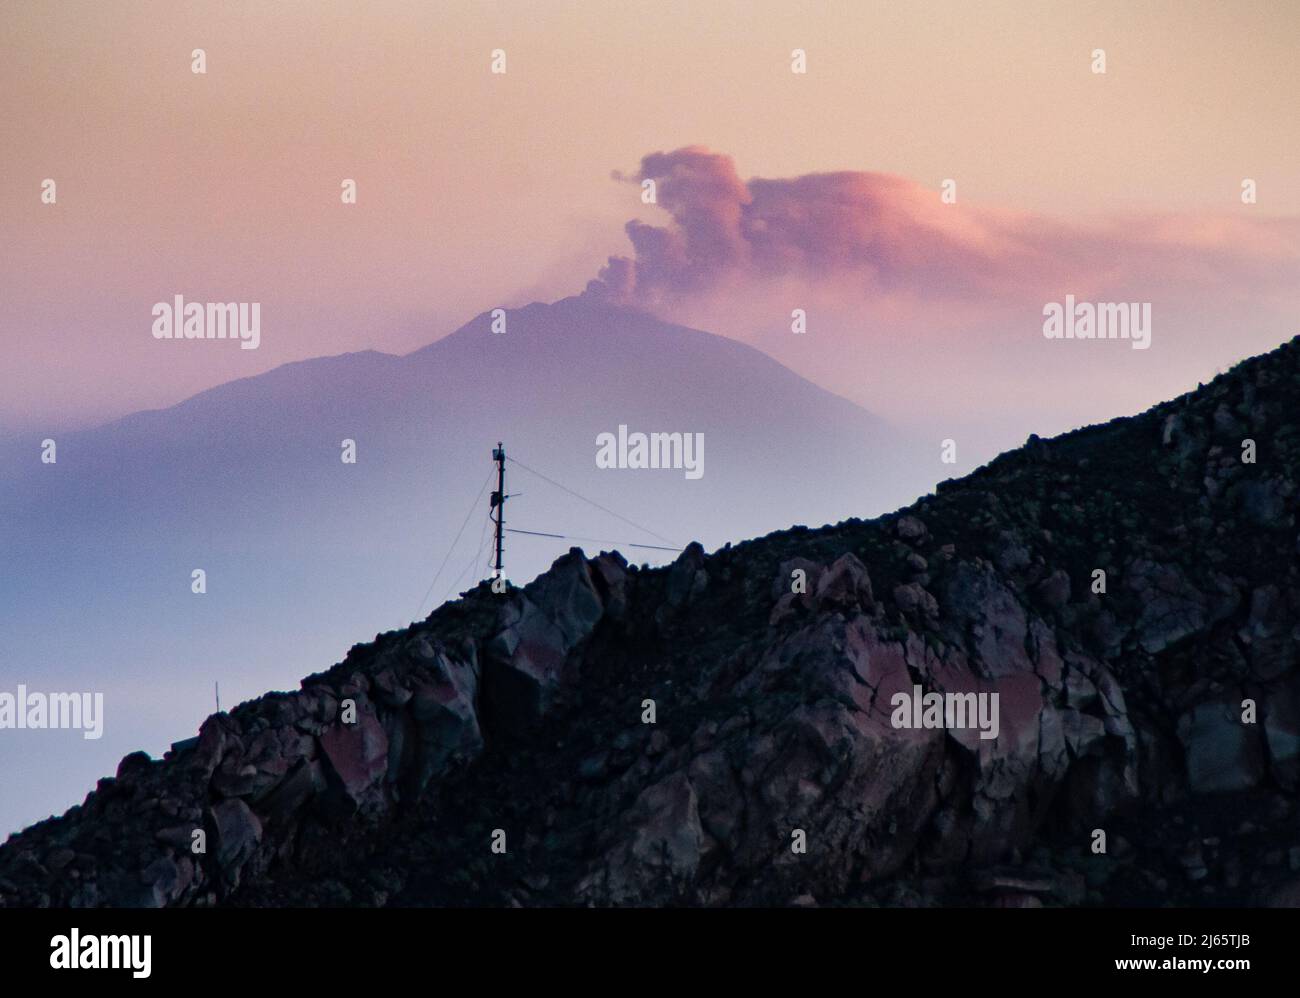 Heftiger Vulkanausbruch am Ätna, gesehen von der Insel Stromboli - parossismo sul Monte Etna, vista dall'isola di Stromboli Foto Stock